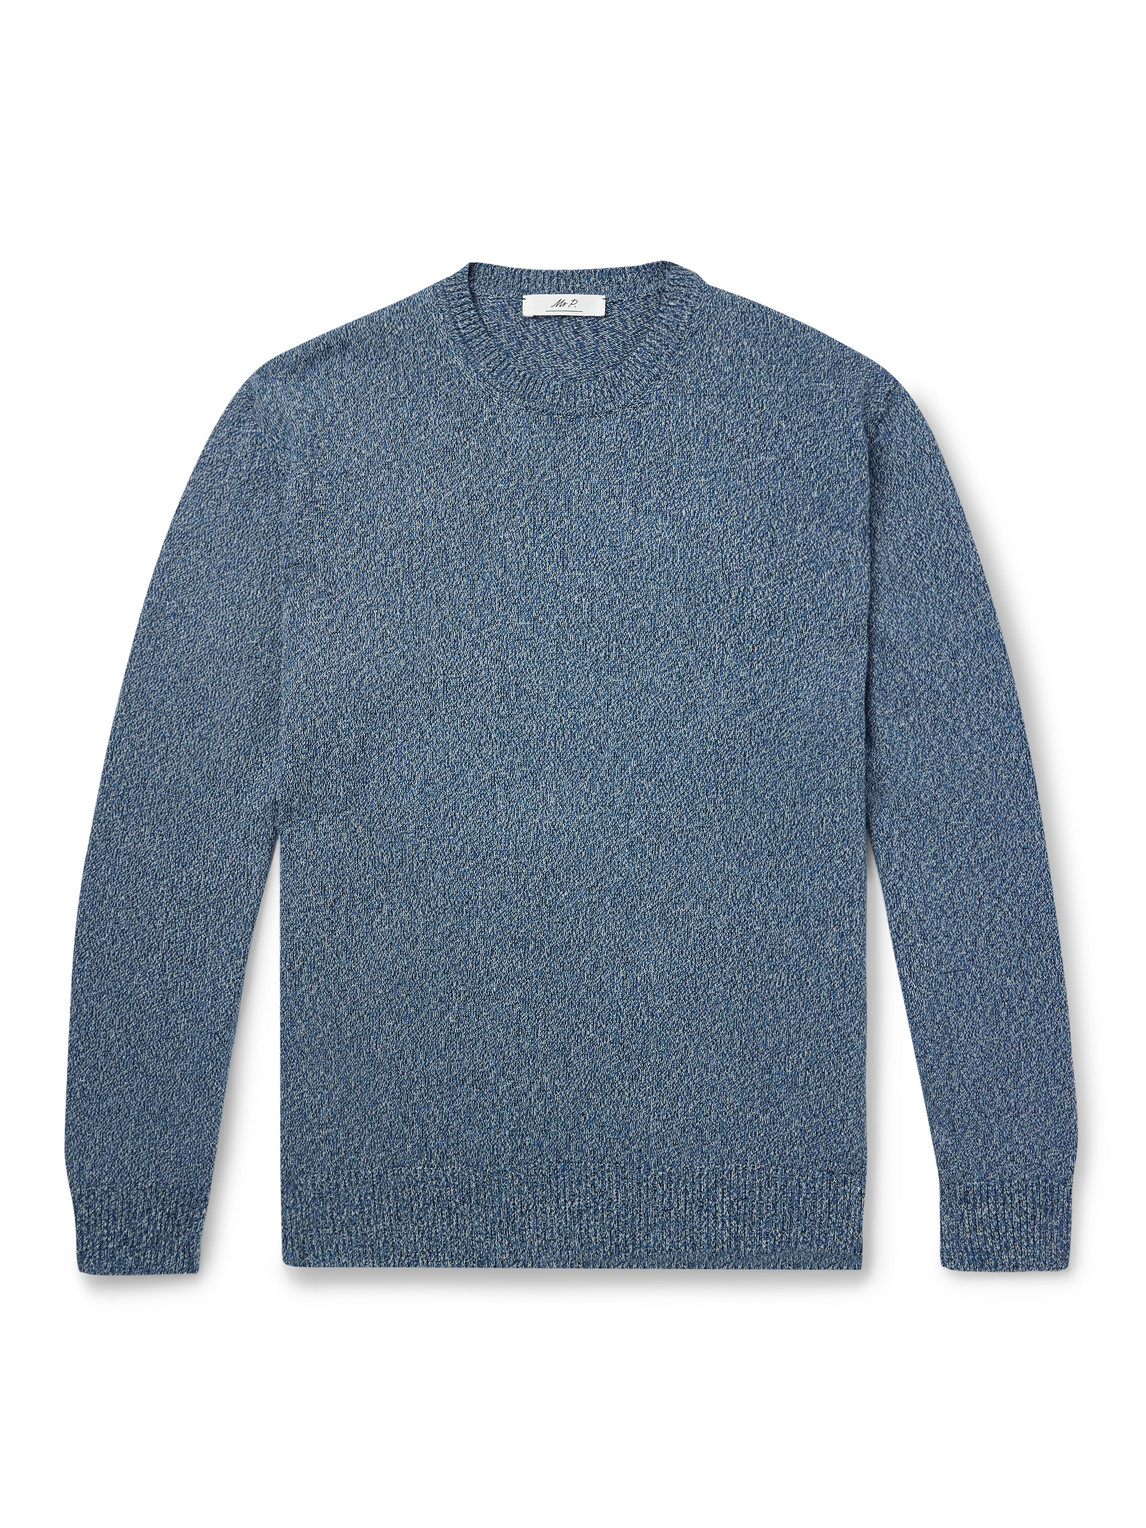 Mr P Cotton Sweater In Blue